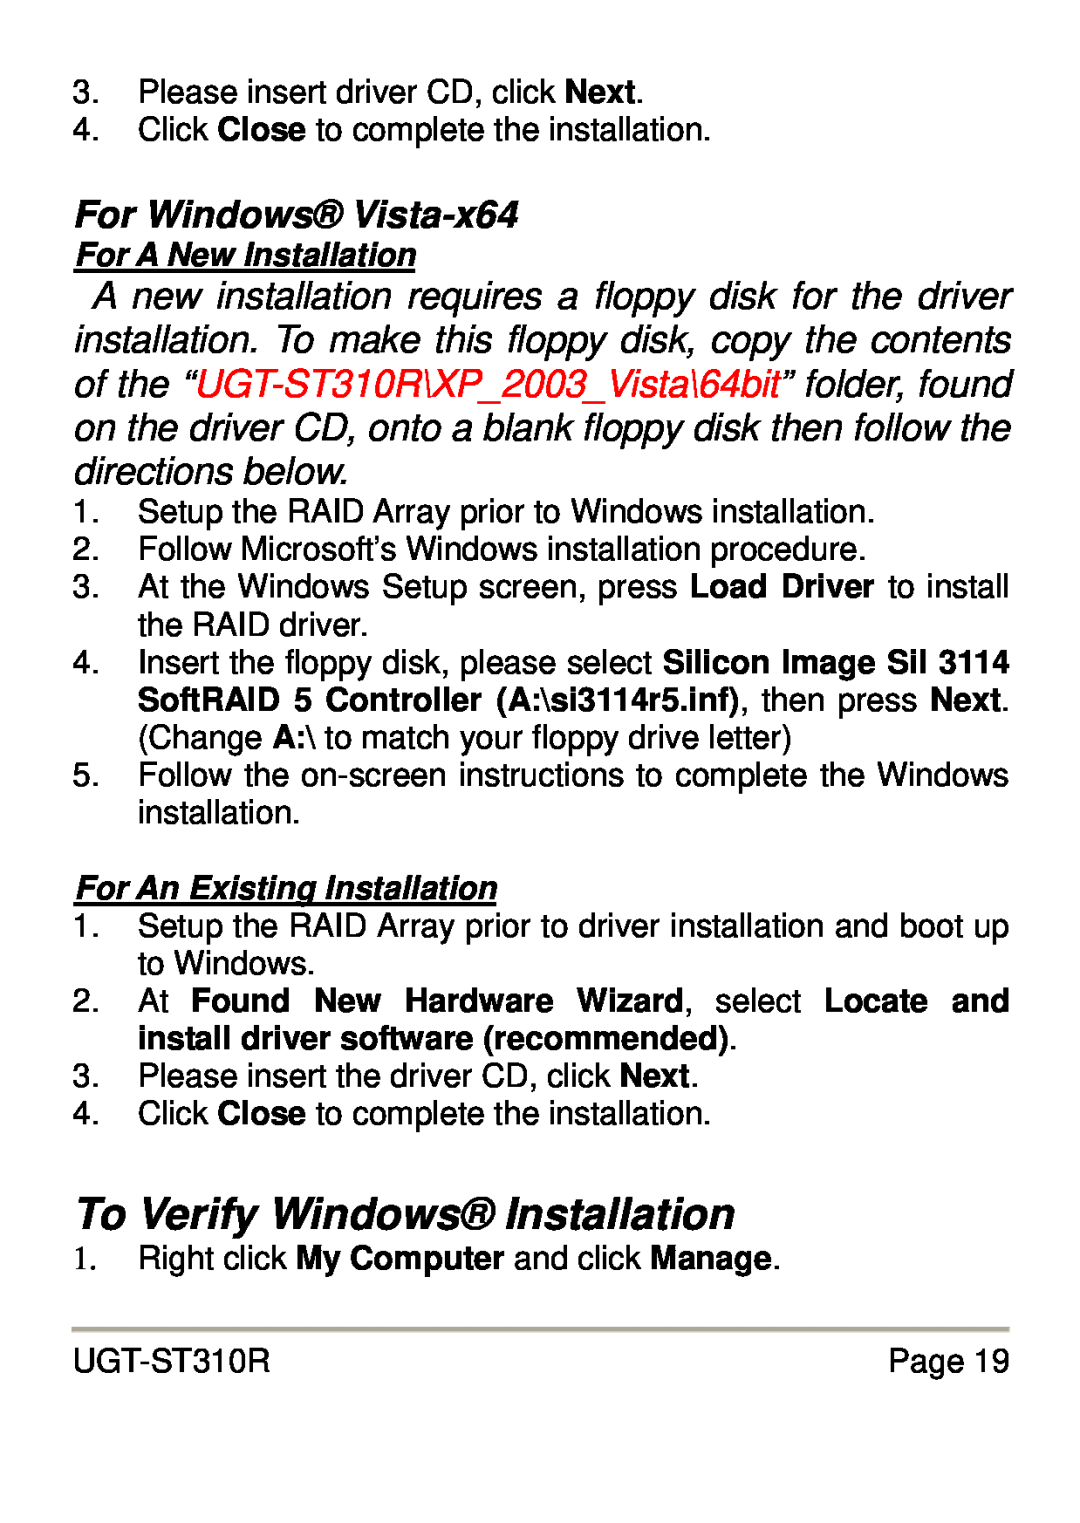 Vantec UGT-ST310R user manual To Verify Windows Installation, For Windows Vista-x64, For A New Installation 